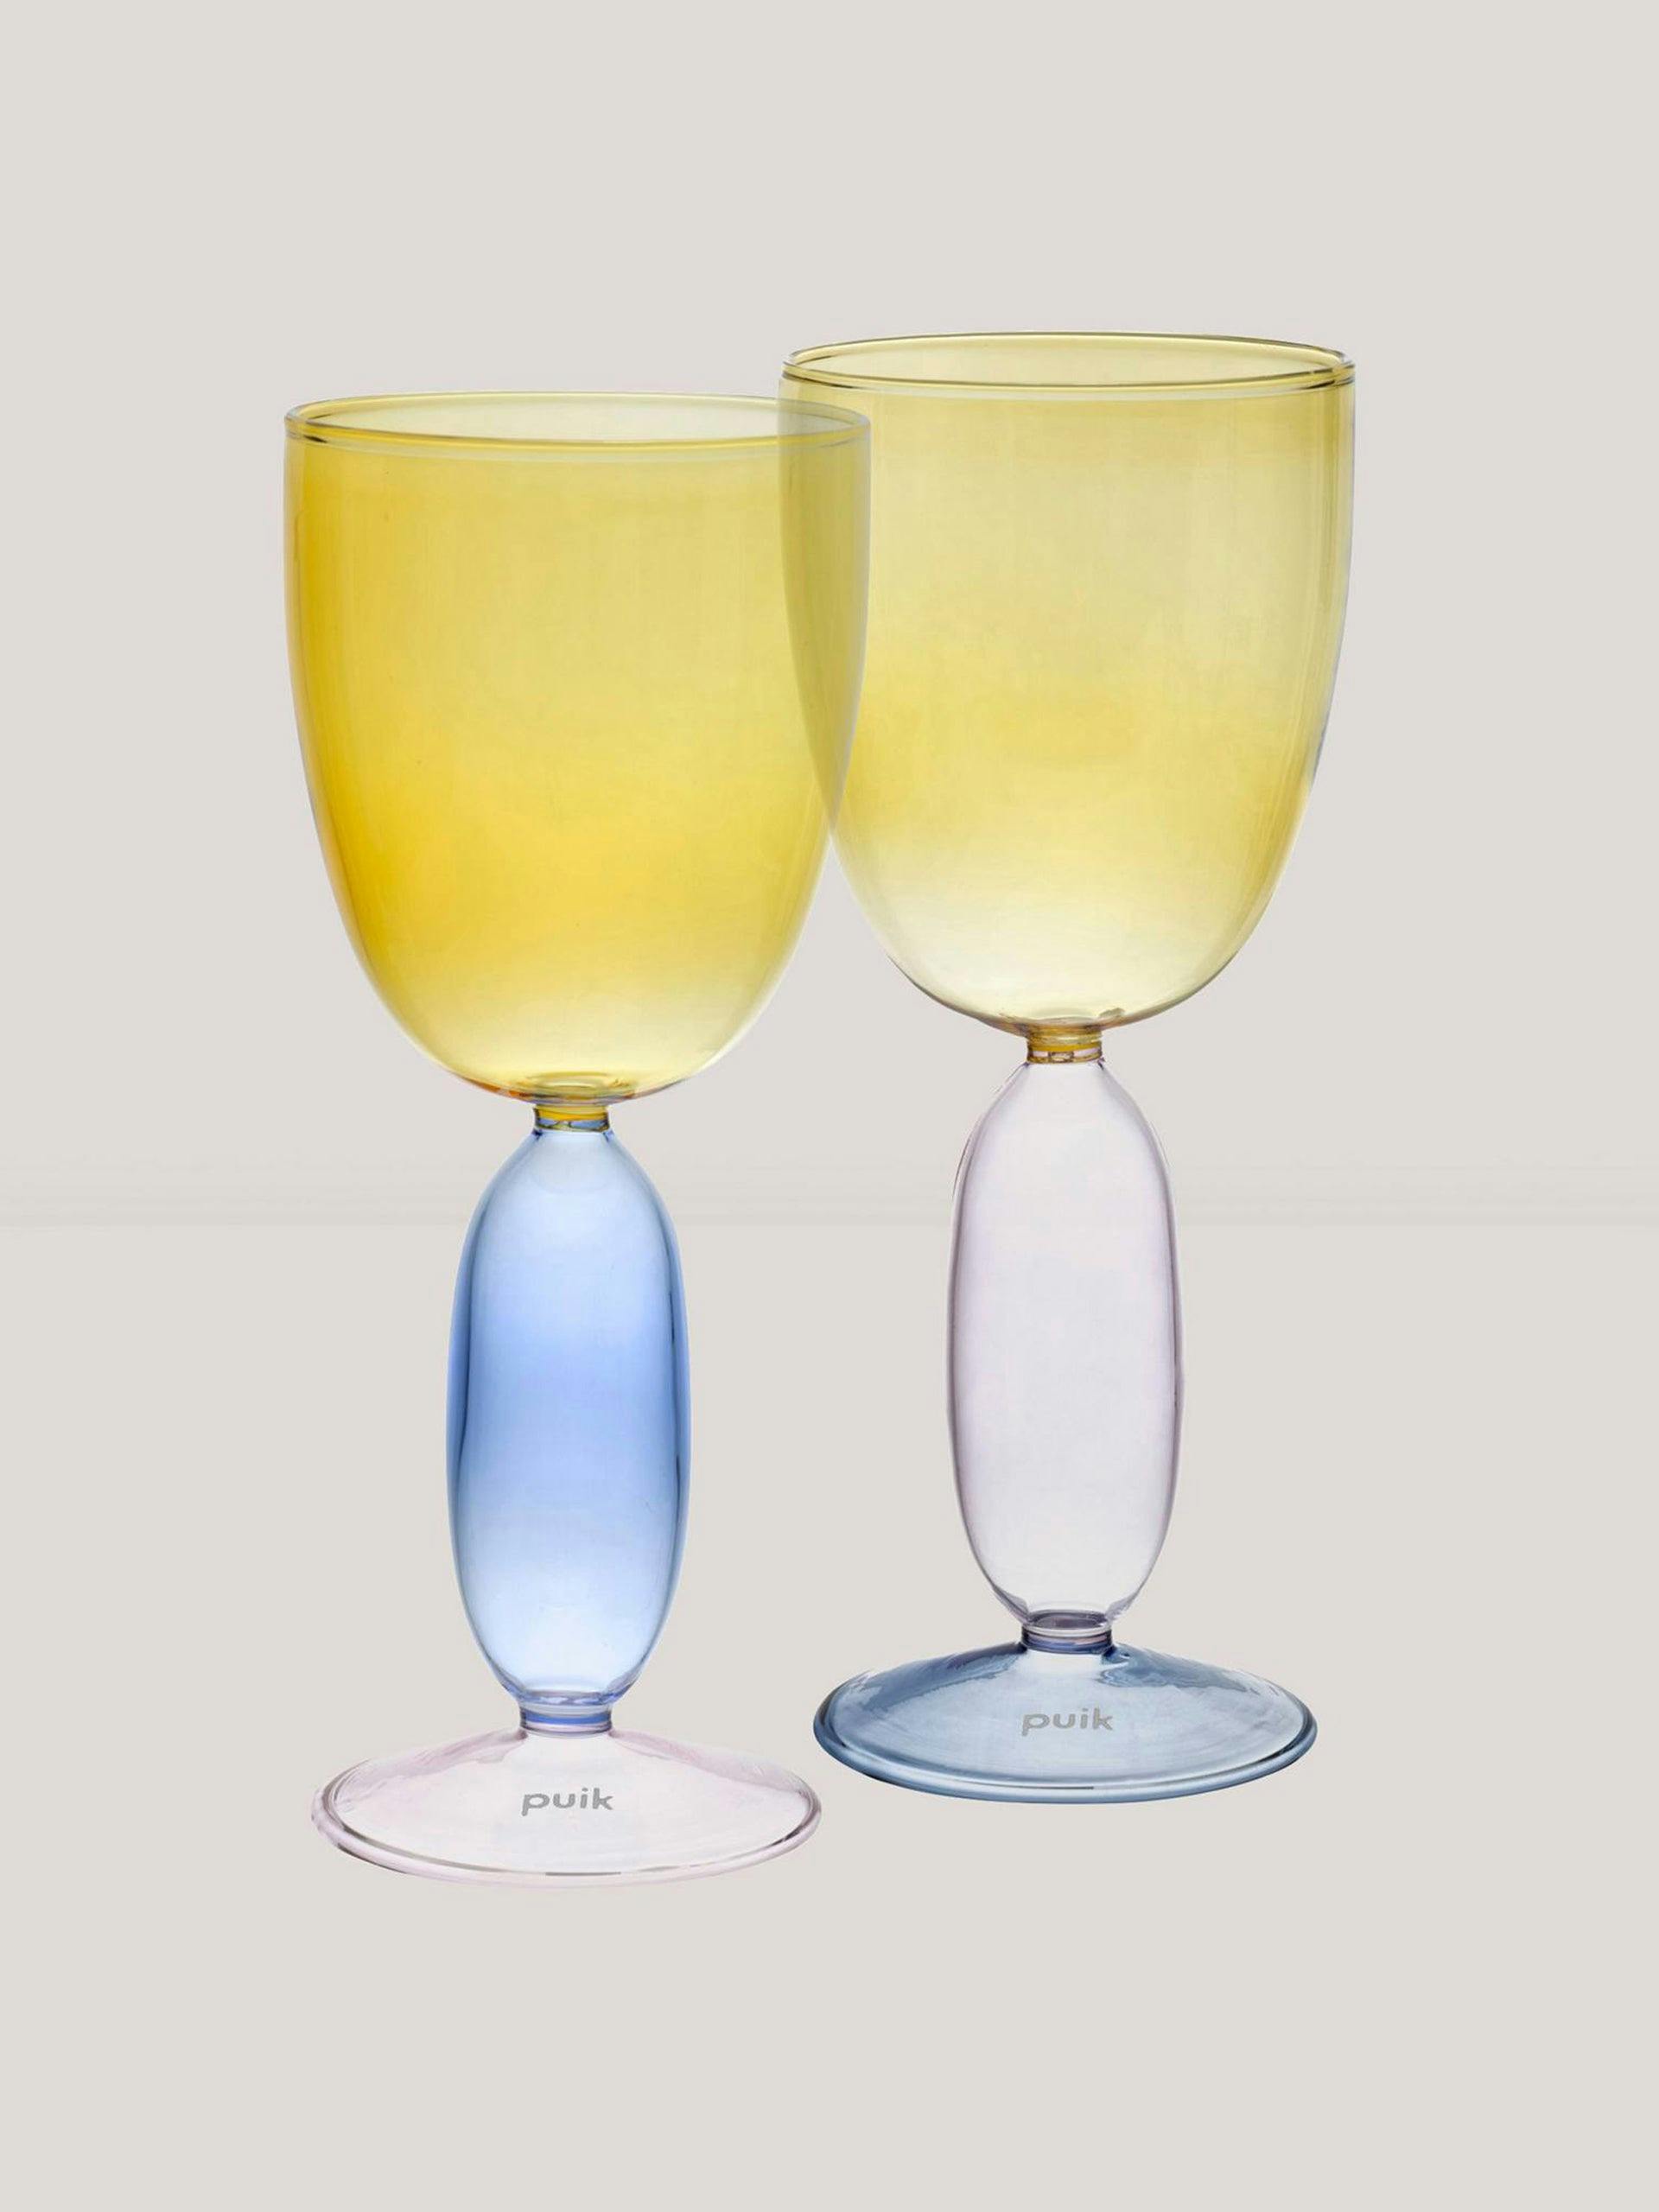 Puik Boon wine glasses (set of 2)